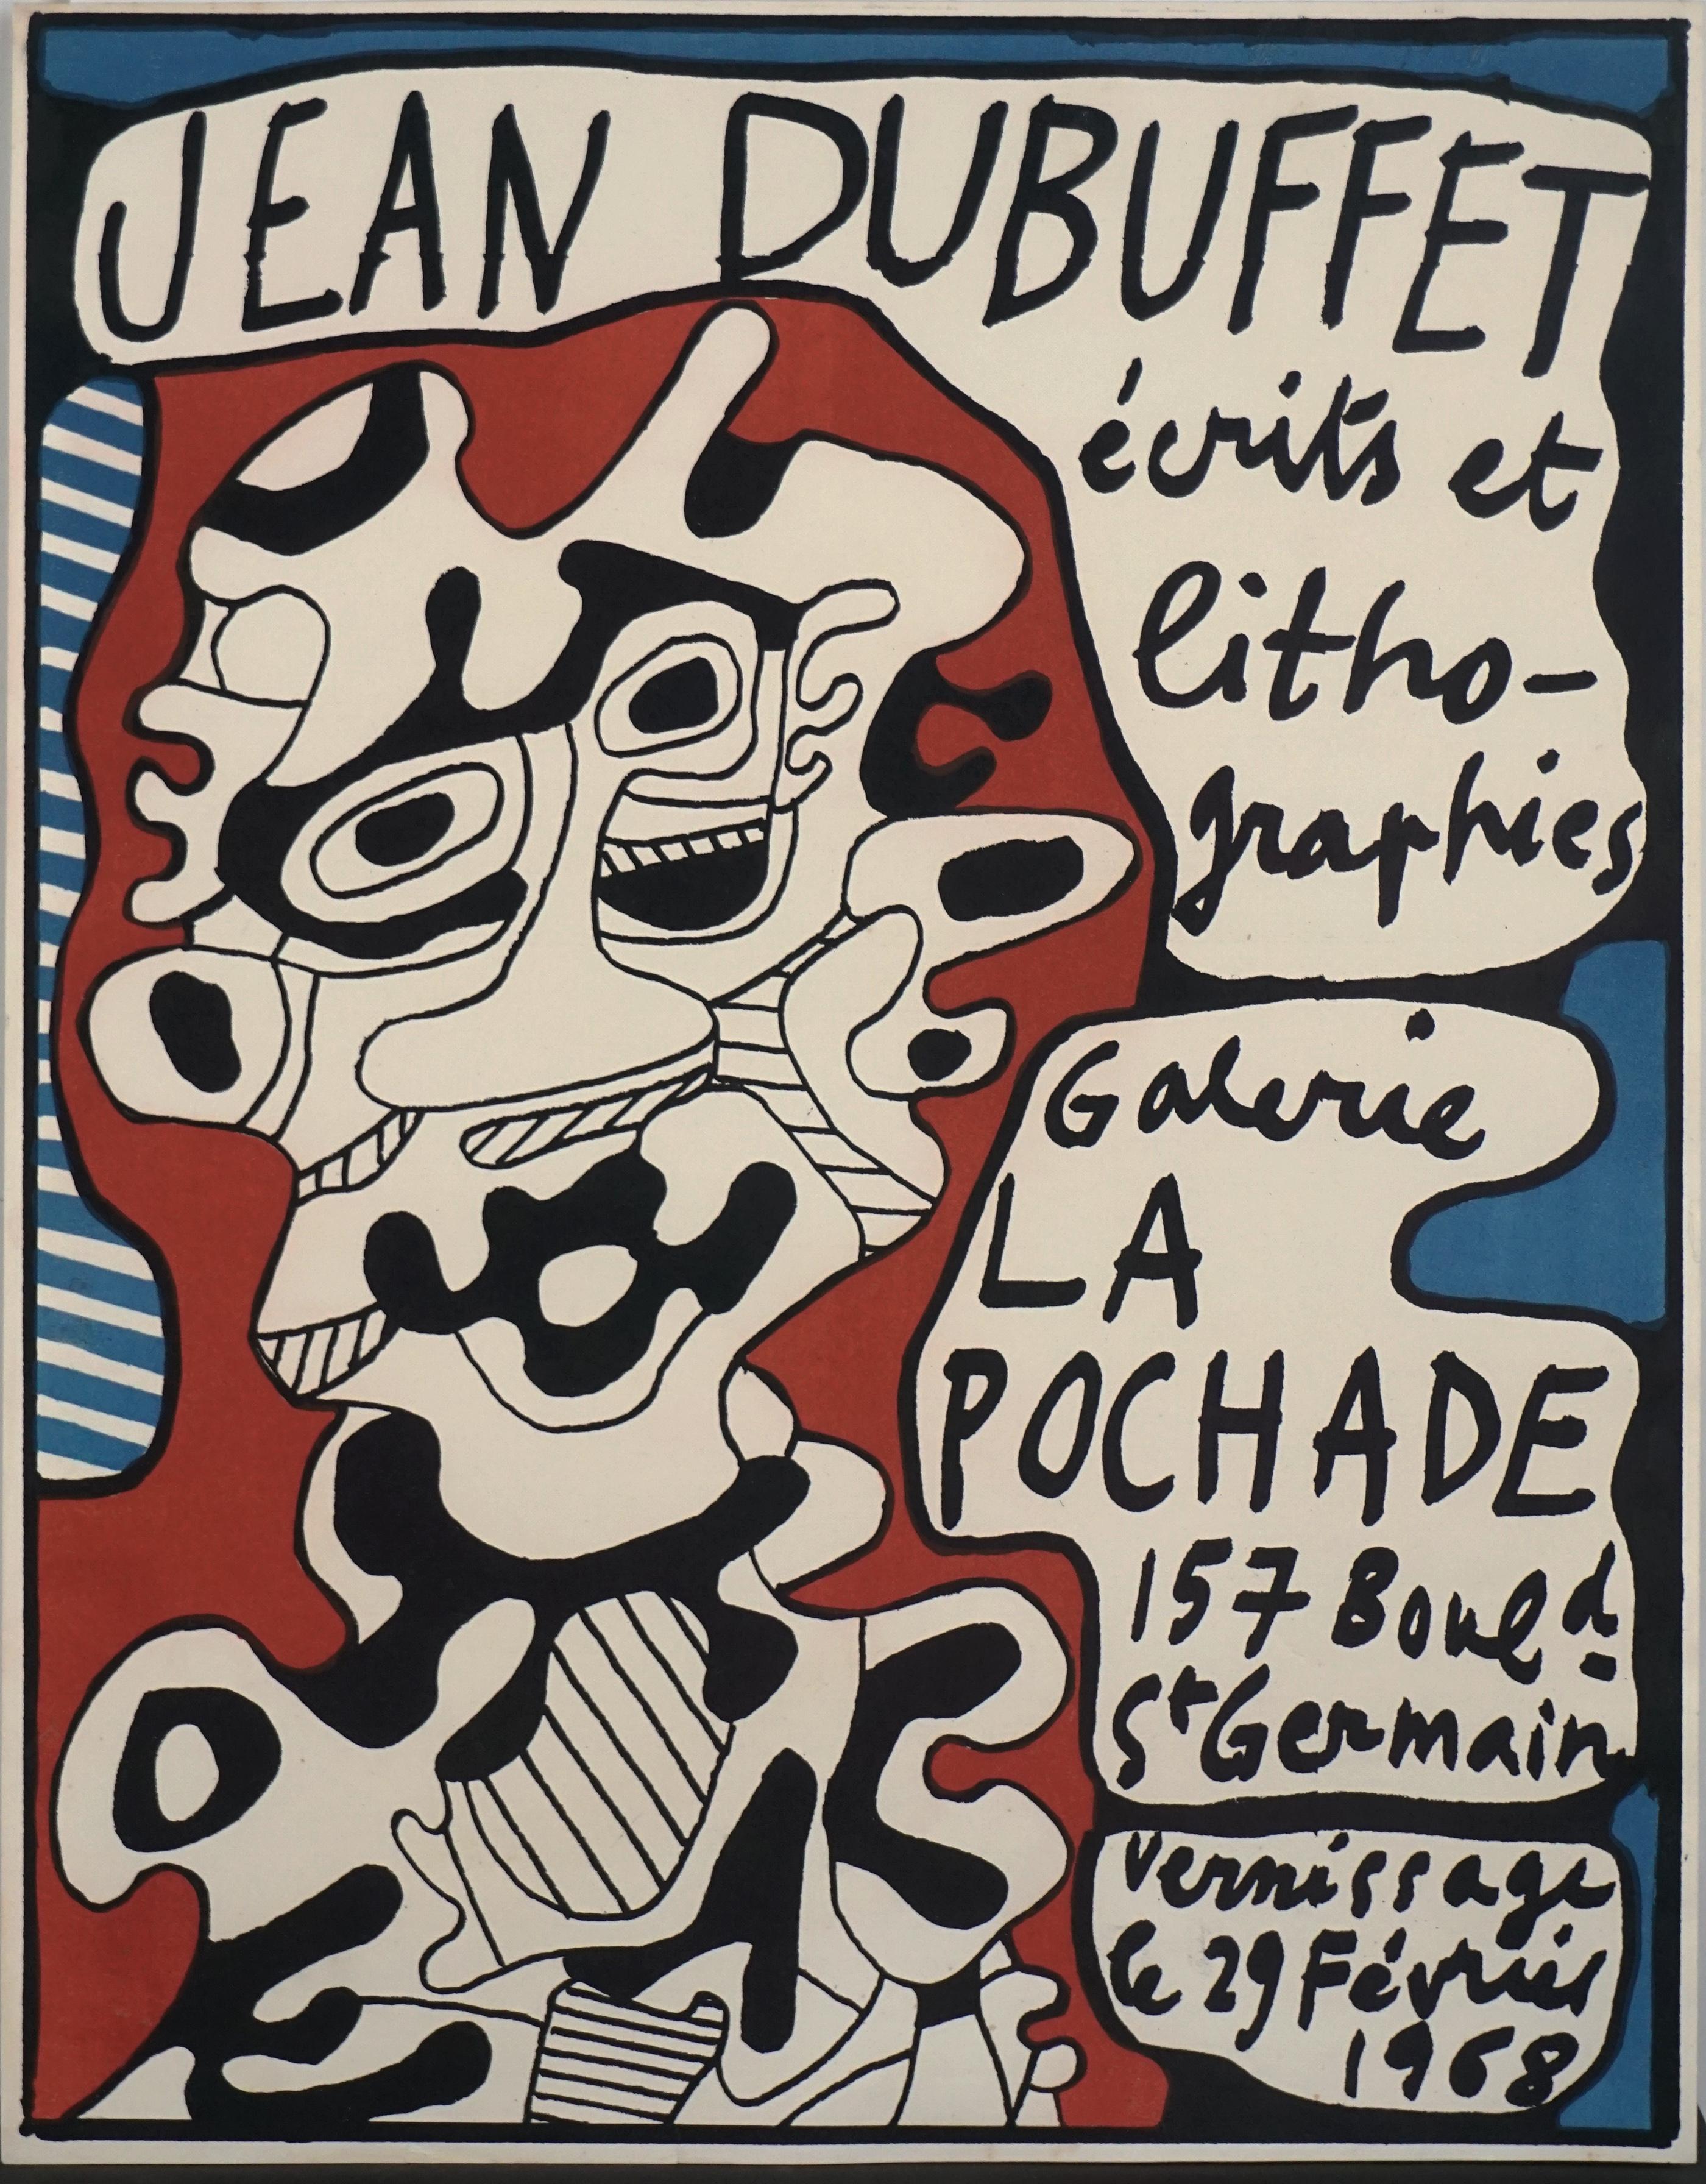 1968 Jean Duffet Ecrits et Lithographies - Galerie La Pochade  - Print by Jean Dubuffet